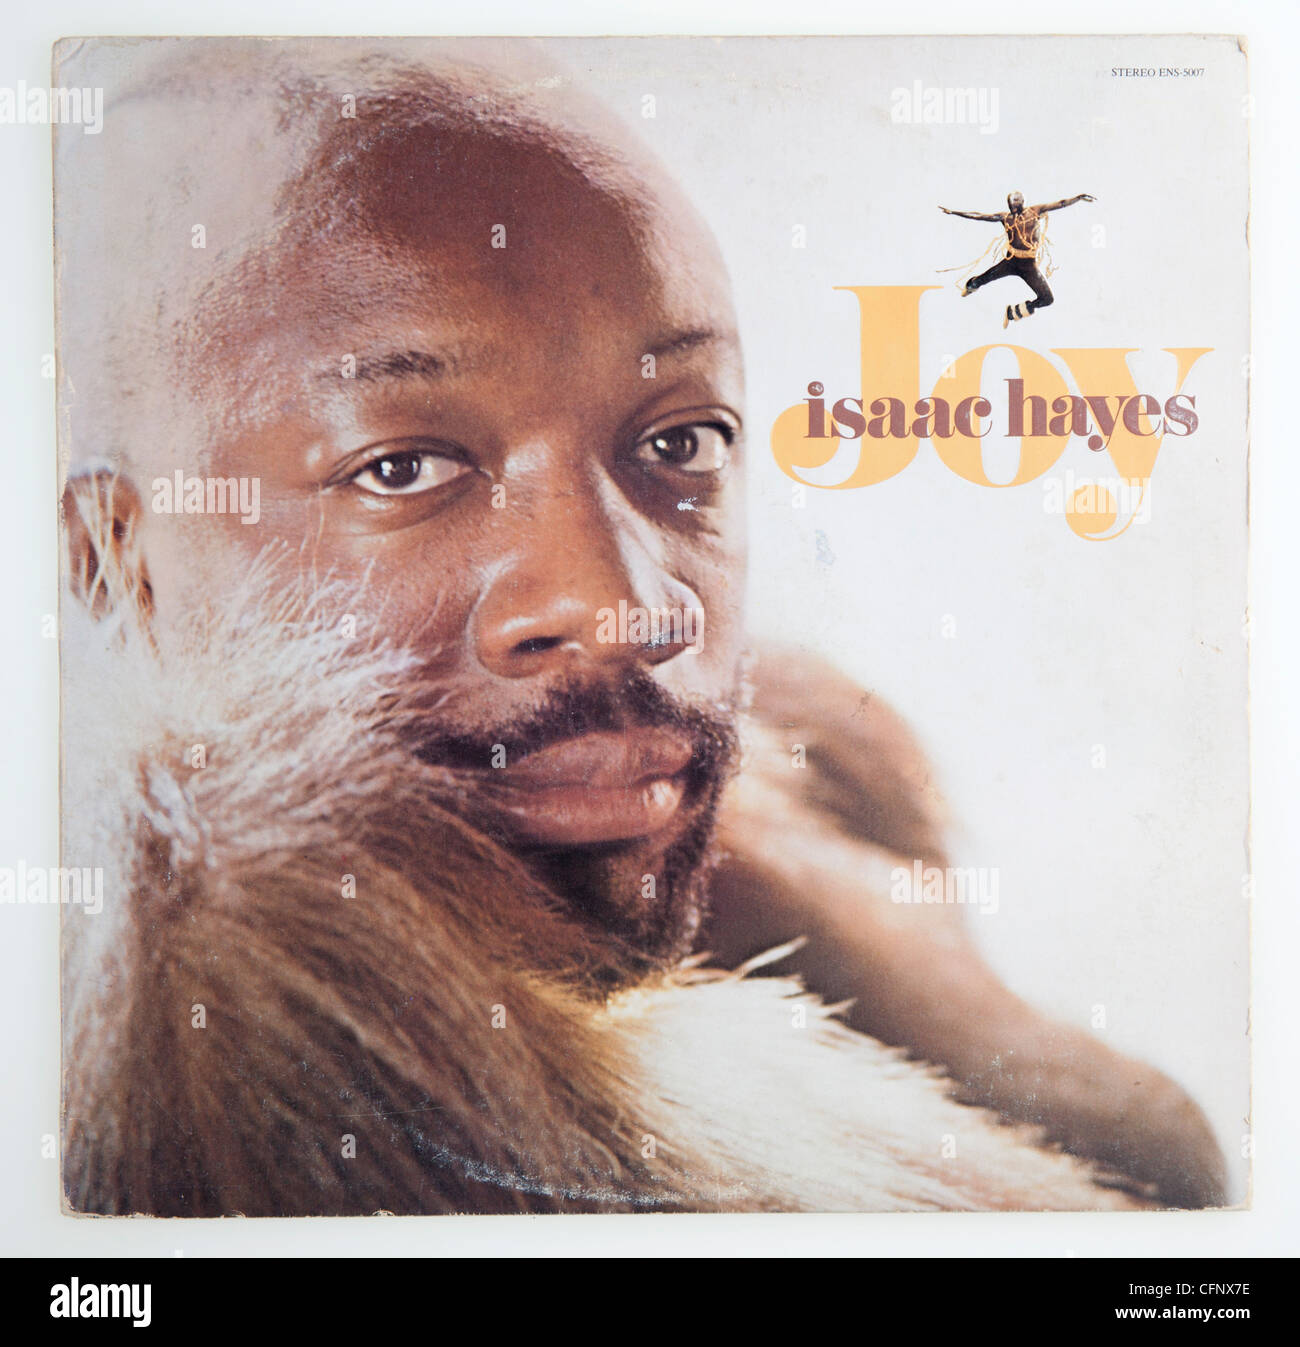 Isaac Hayes, Joy album cover Stock Photo